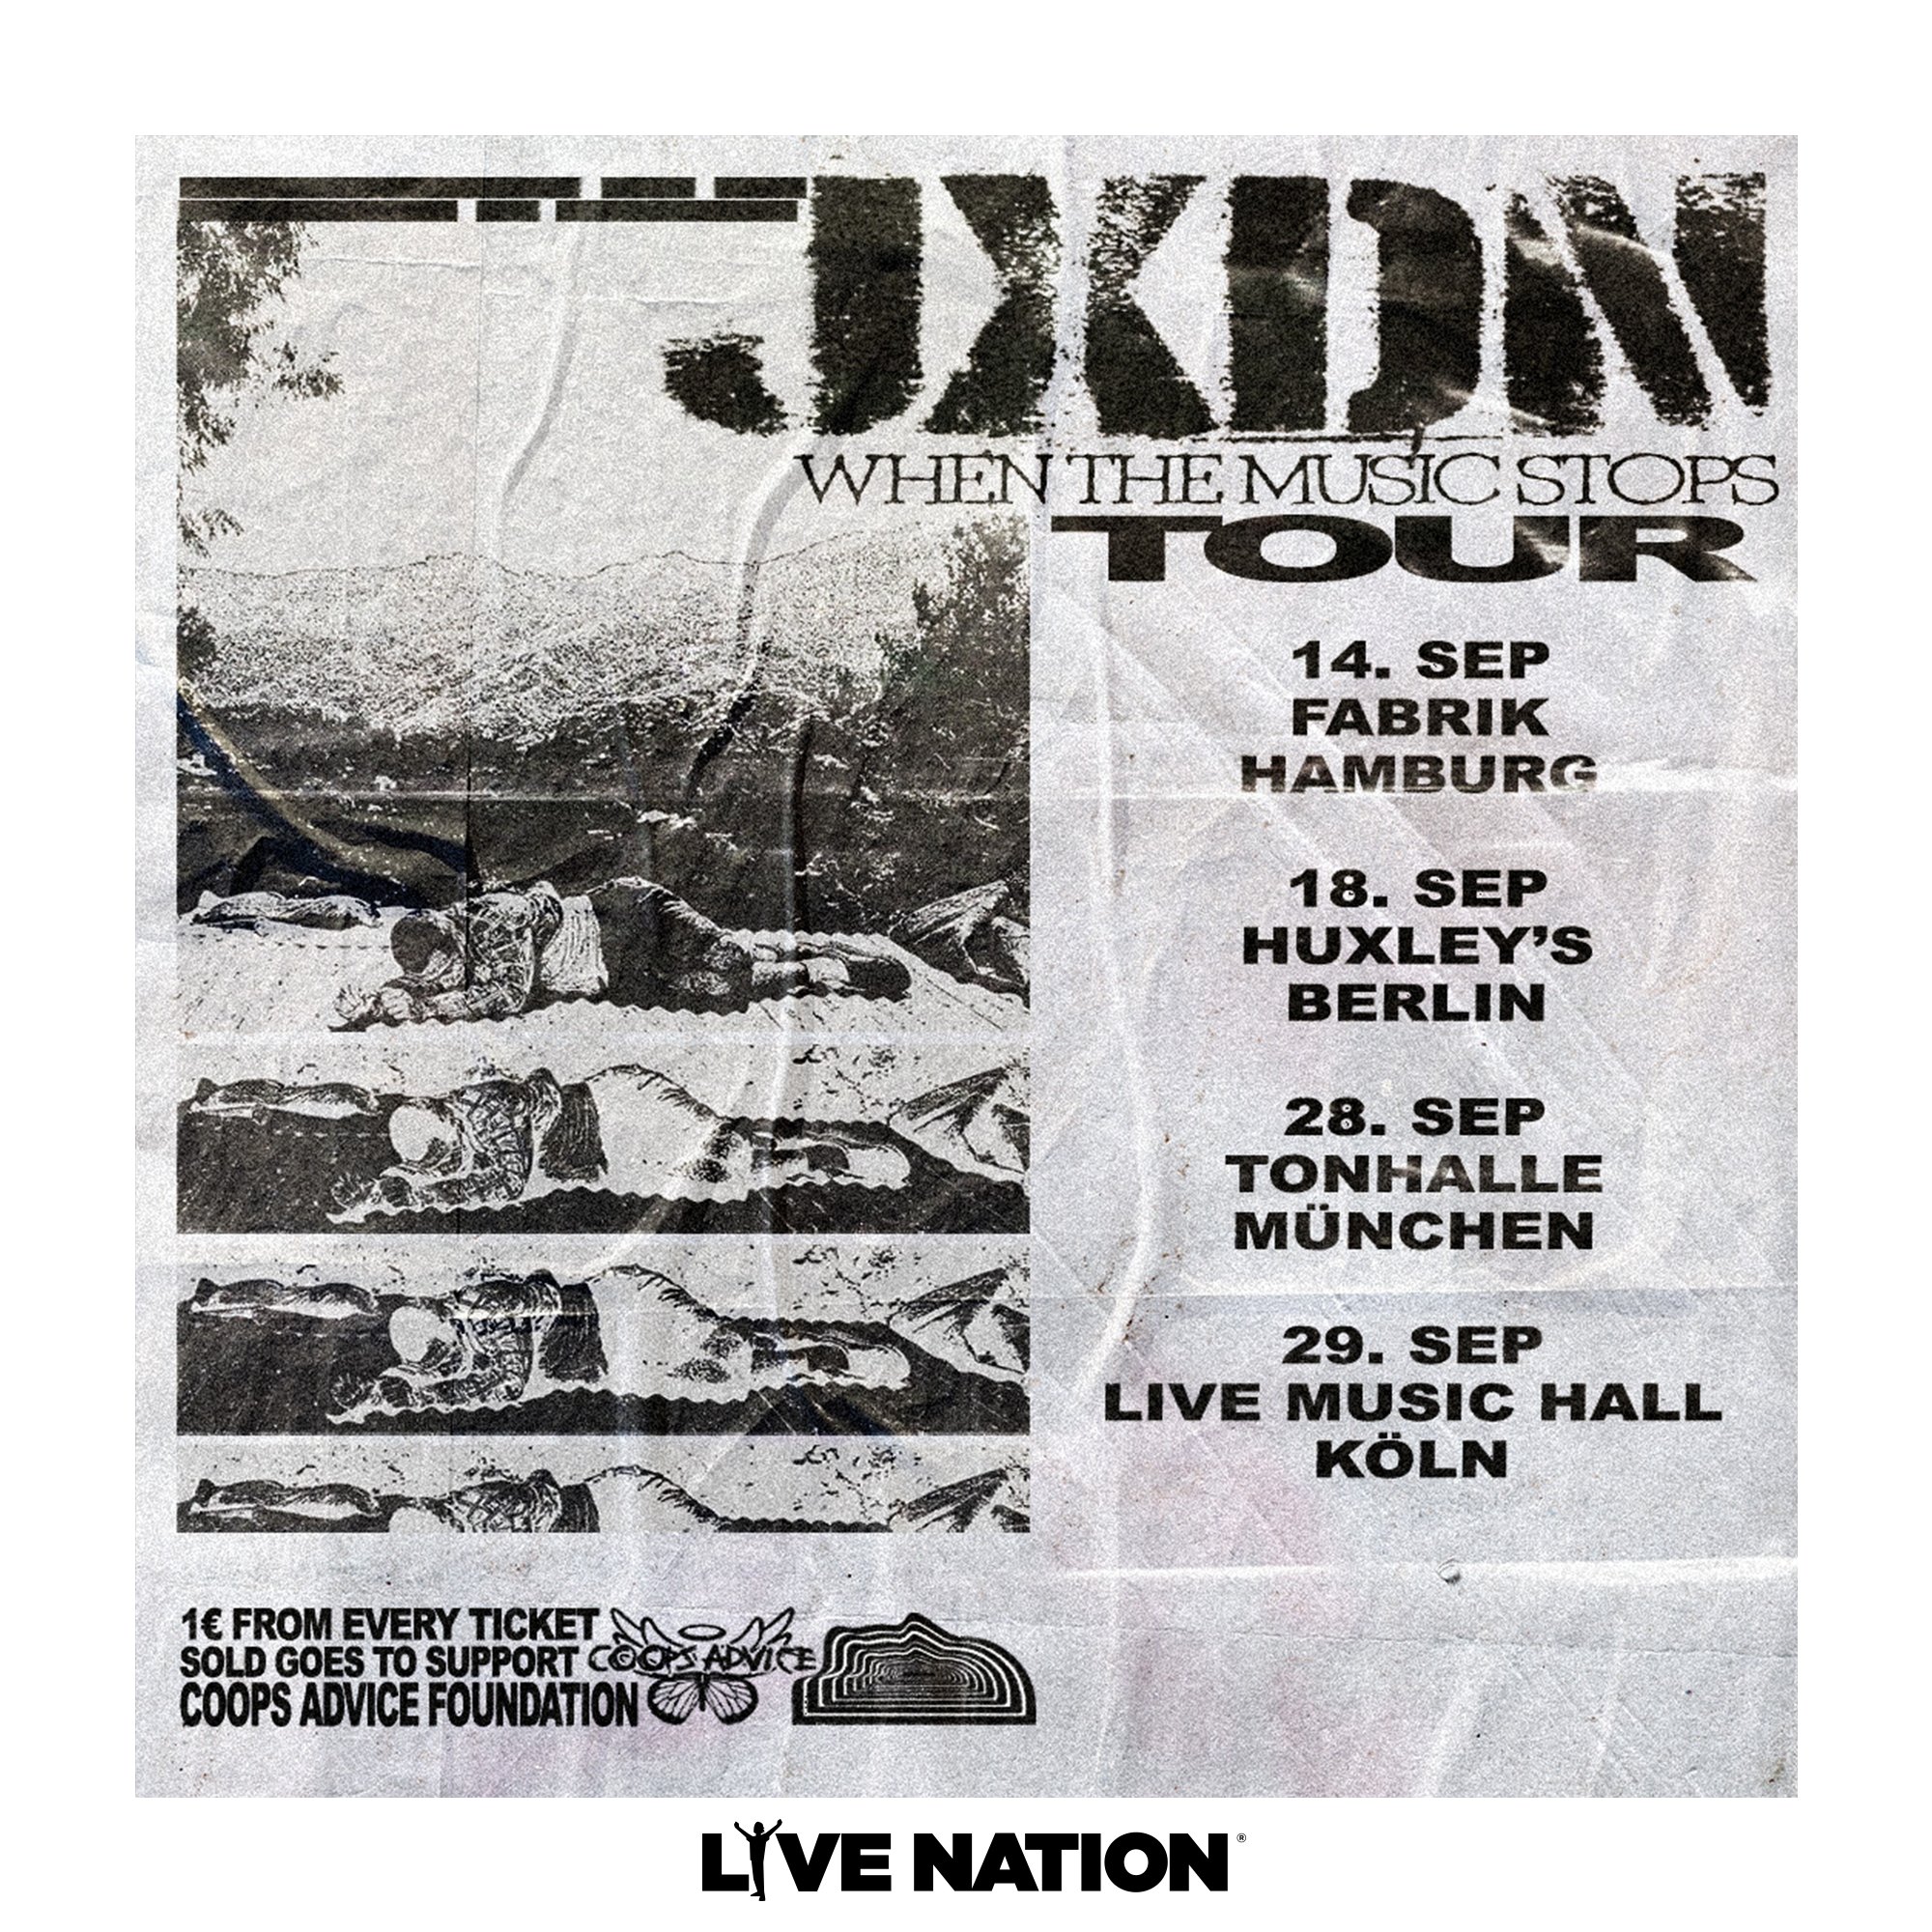 Jxdn - When The Music Stops Tour in der TonHalle München Tickets